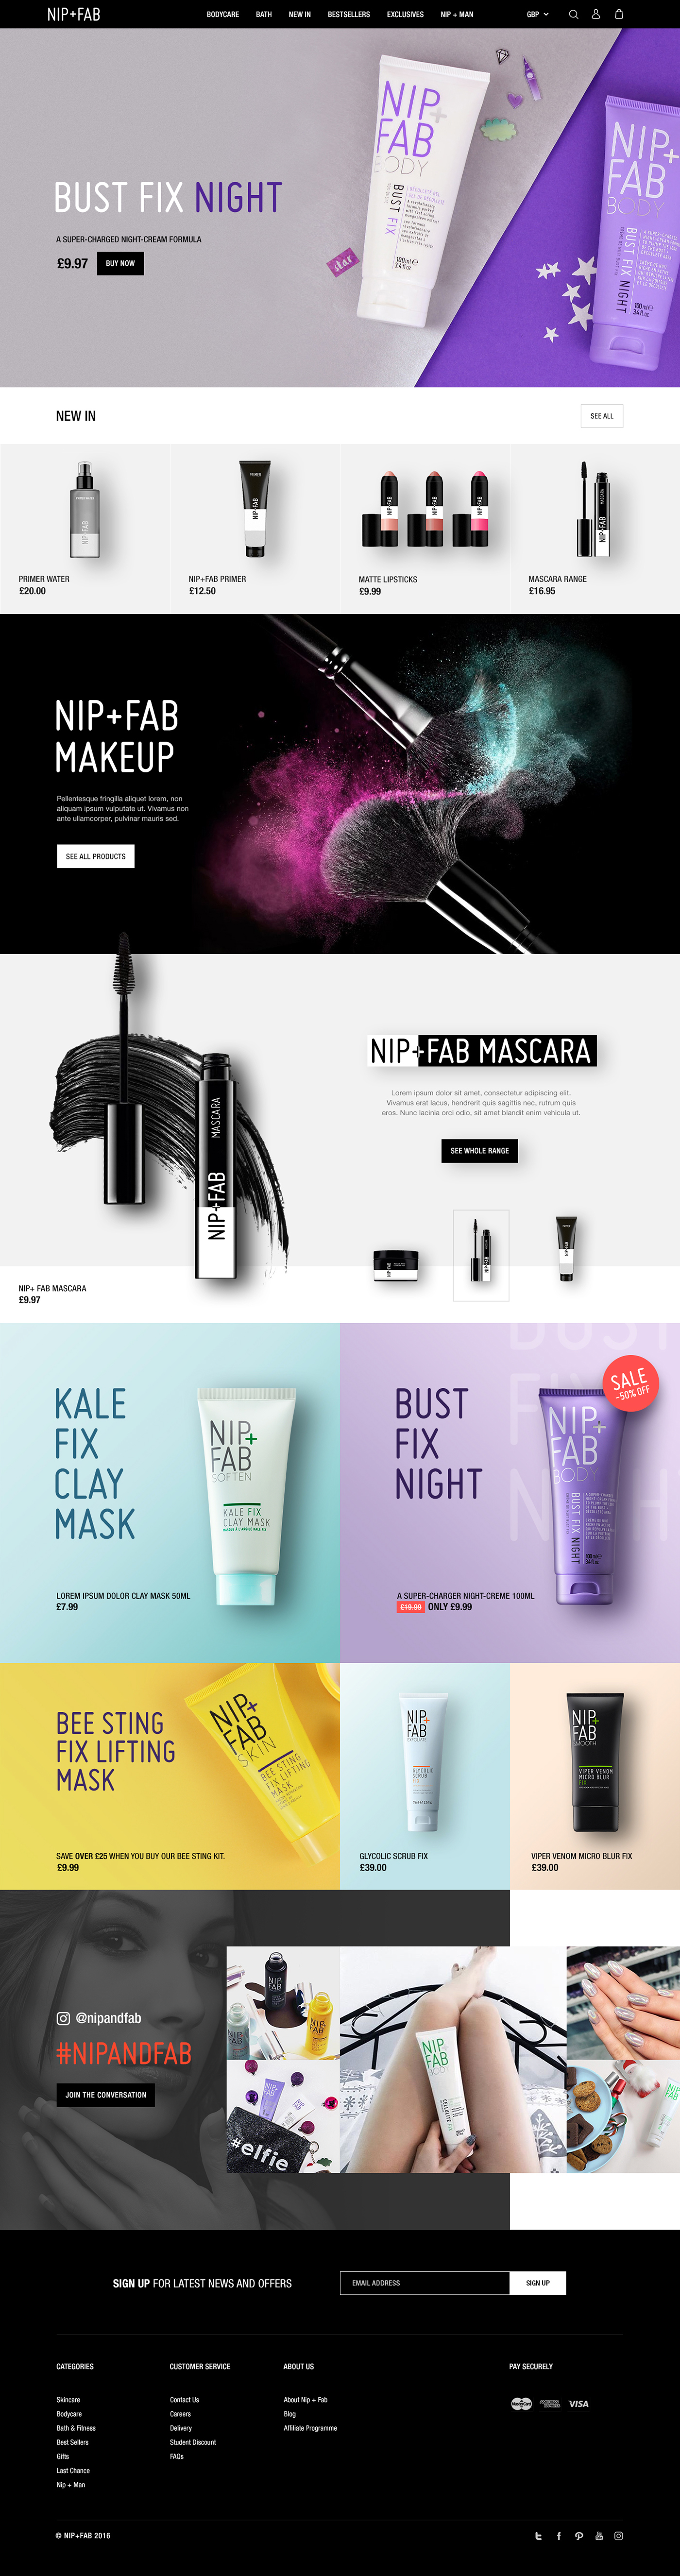 nip & fab rodial makeup skincare Website Design Responsive mobile